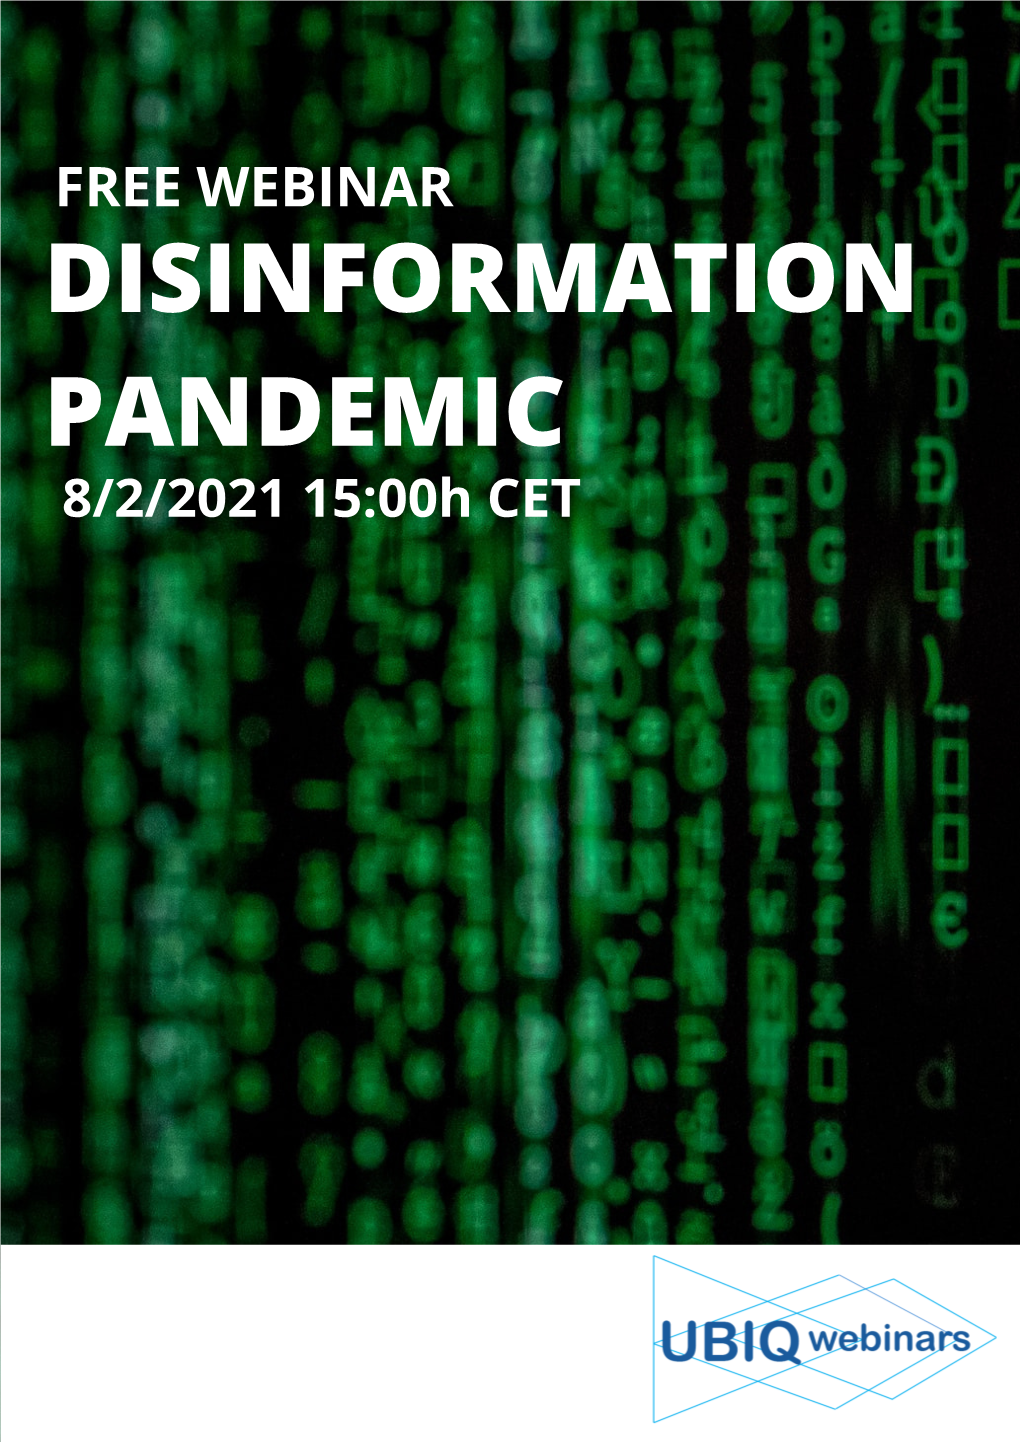 DISINFORMATION PANDEMIC 8/2/2021 15:00H CET SPEAKERS